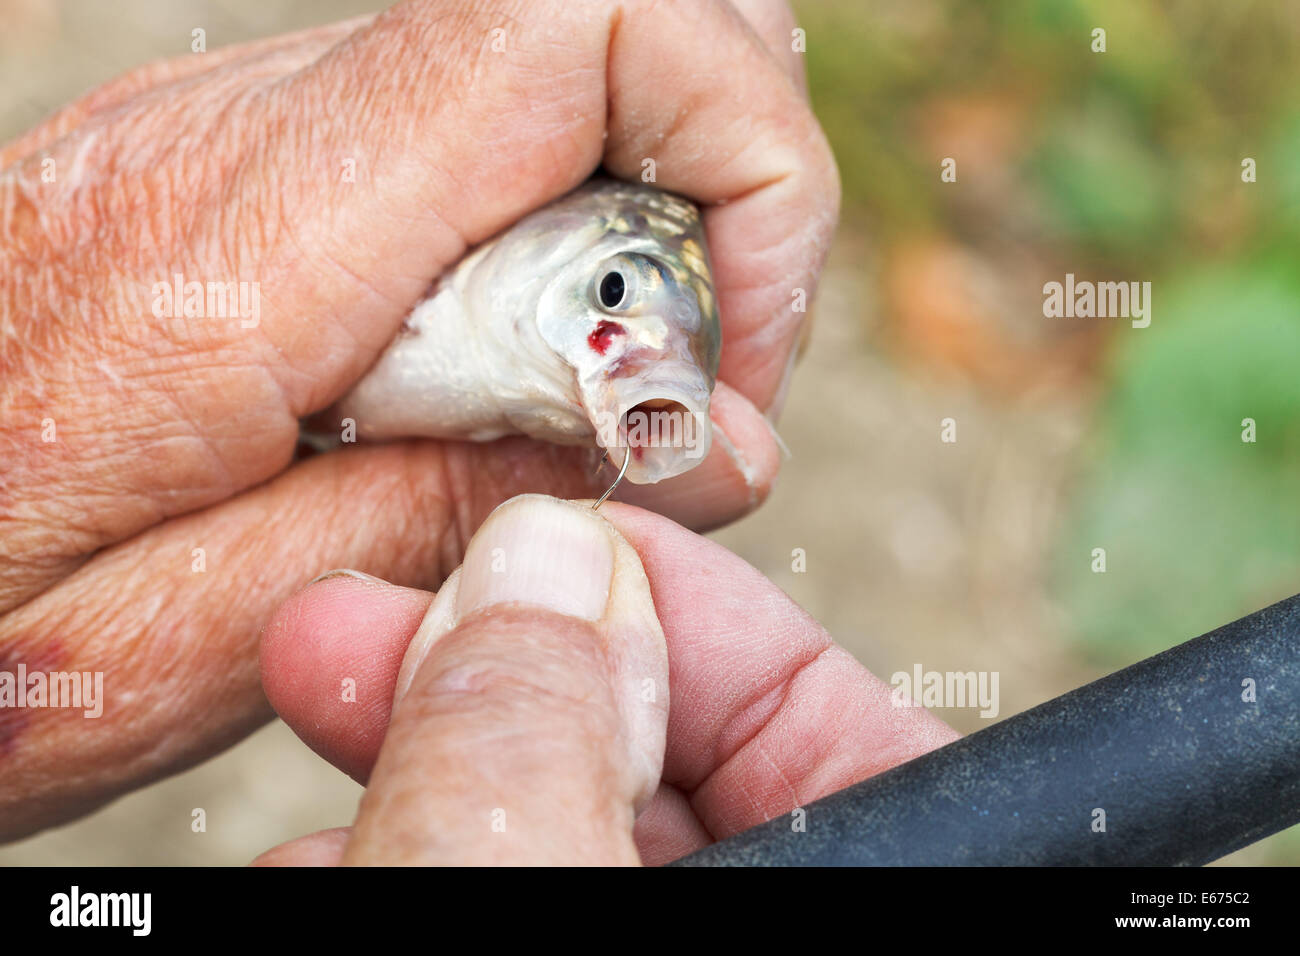 Fish hook pulling skin Stock Photo - Alamy